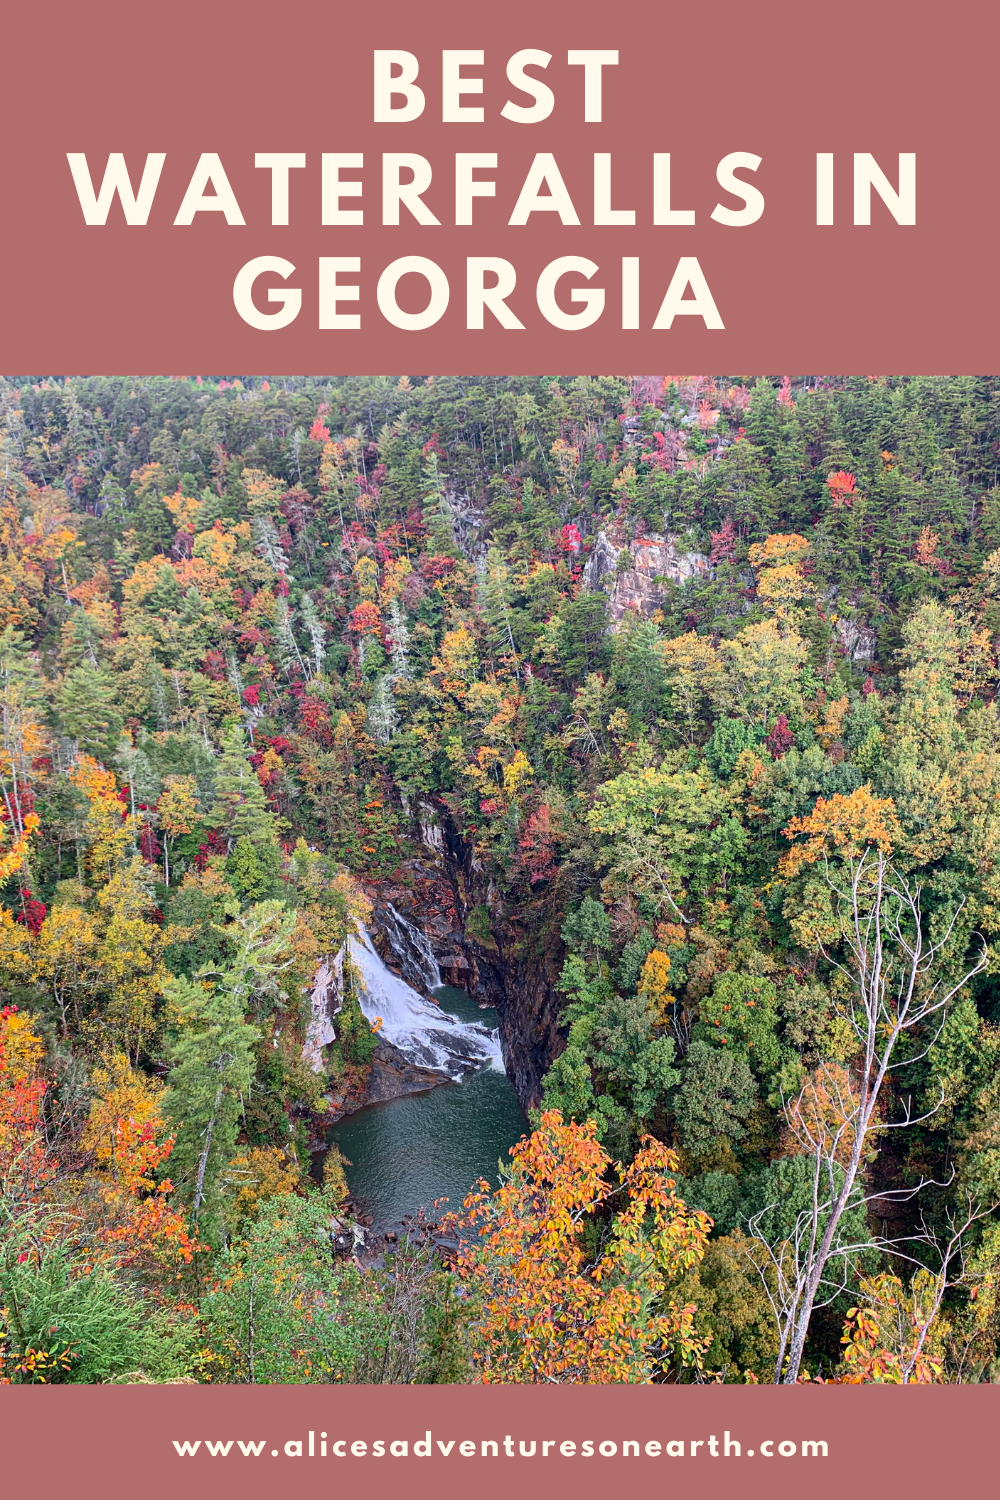 Biking, hiking and walking at Tallulah Gorge State Park in North Georgia. Great waterfalls, fall colors and scenic overlooks.  #hiking #georgia #waterfalls 